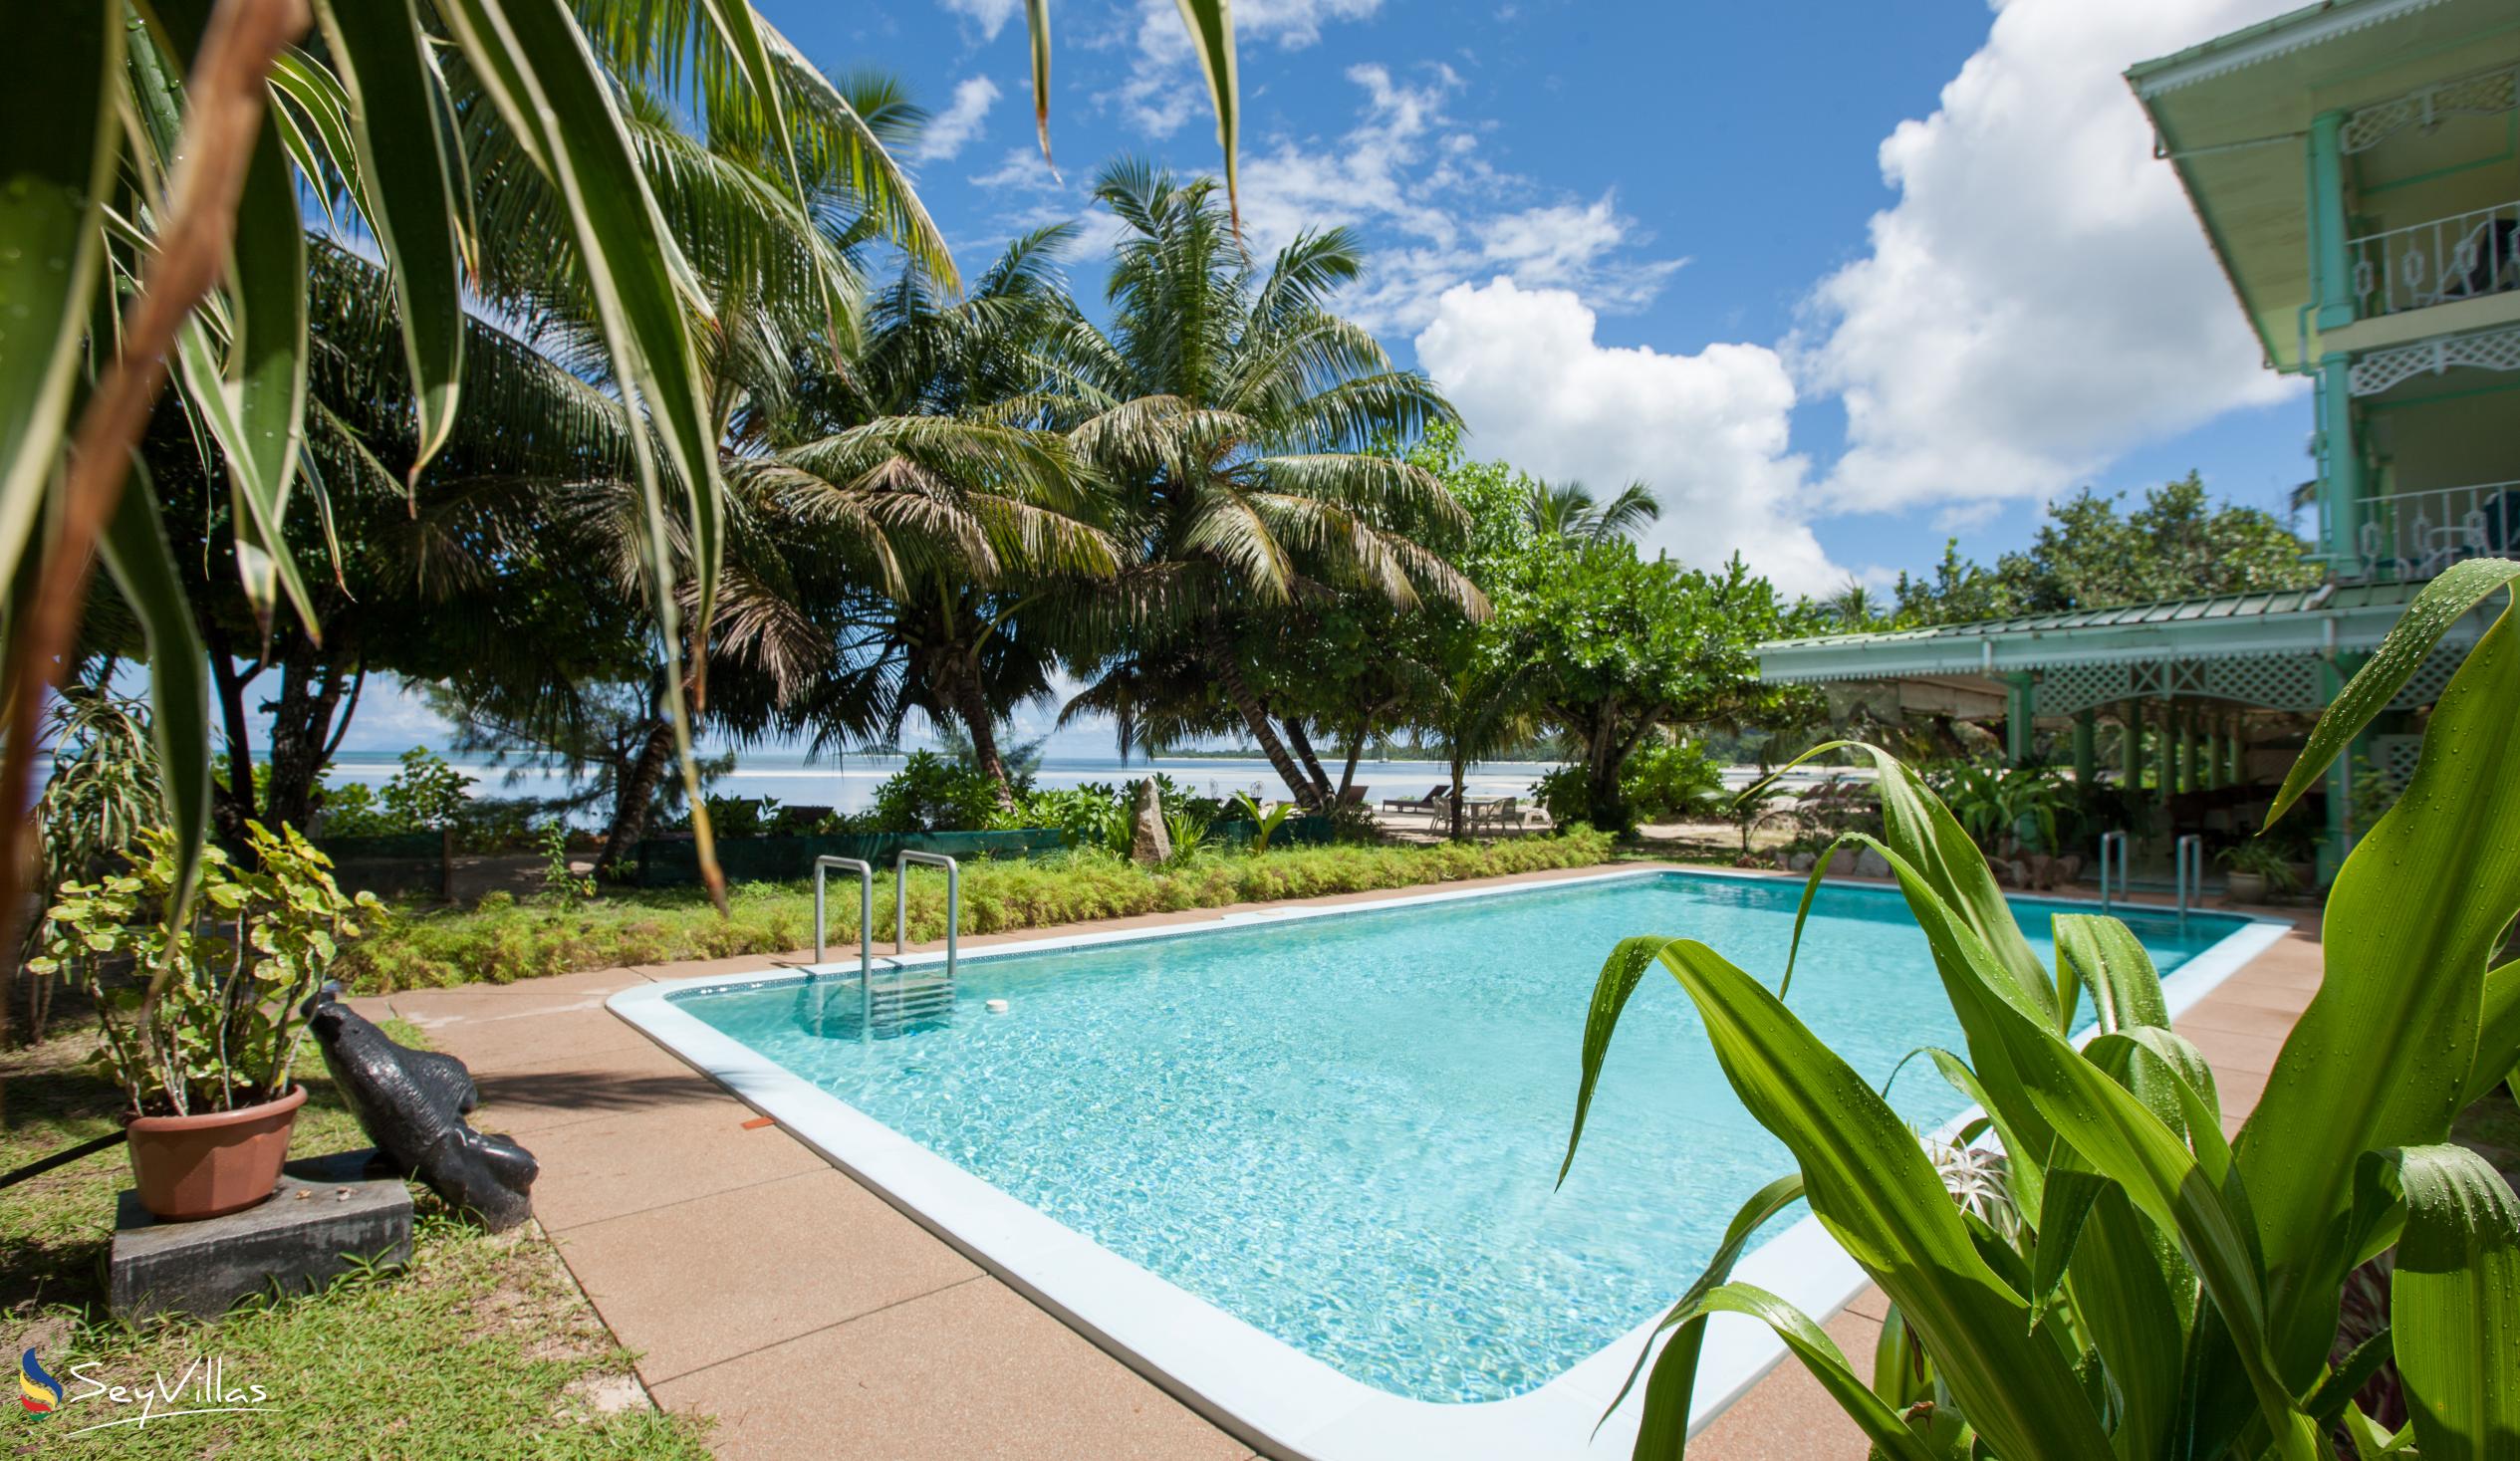 Photo 2: Palm Beach Hotel - Outdoor area - Praslin (Seychelles)